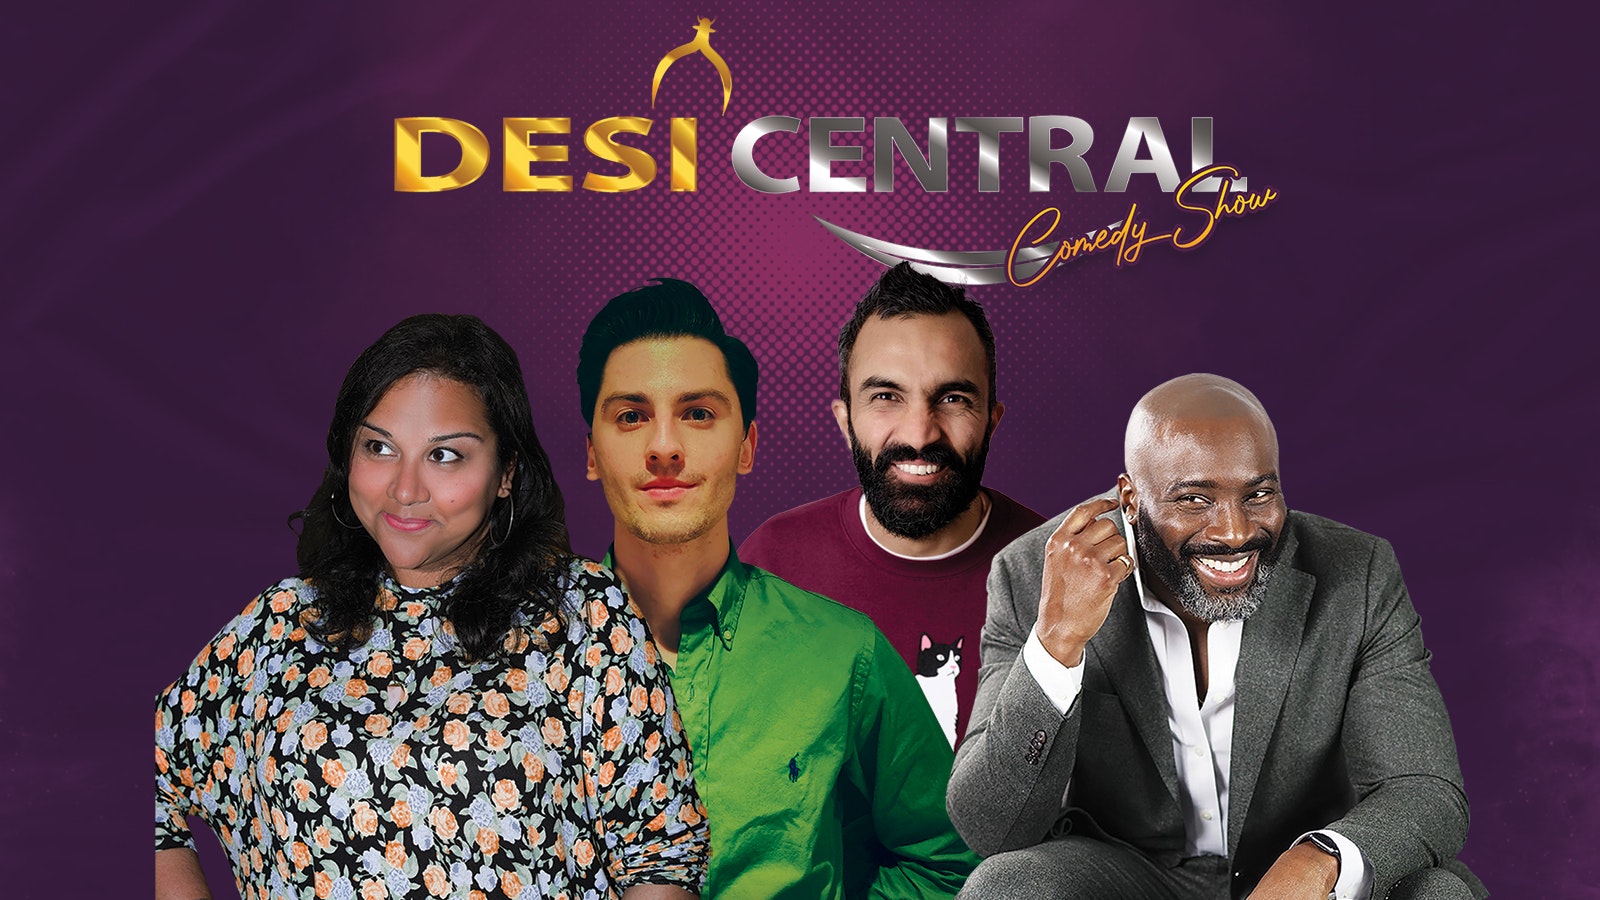 Desi Central Comedy Show – Crawley